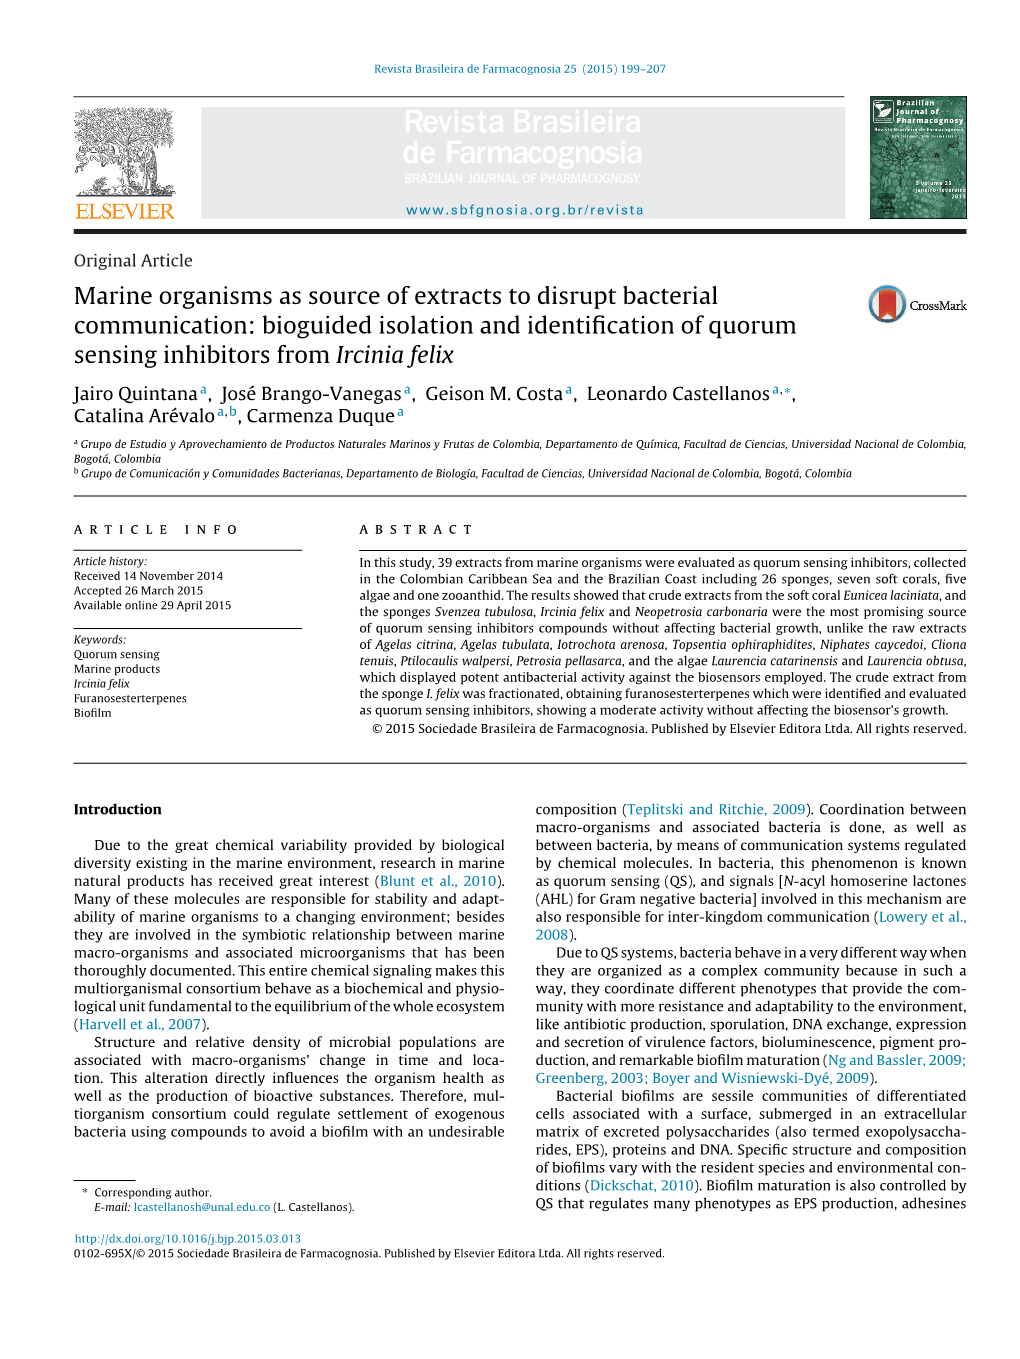 Bioguided Isolation and Identification of Quorum Sens